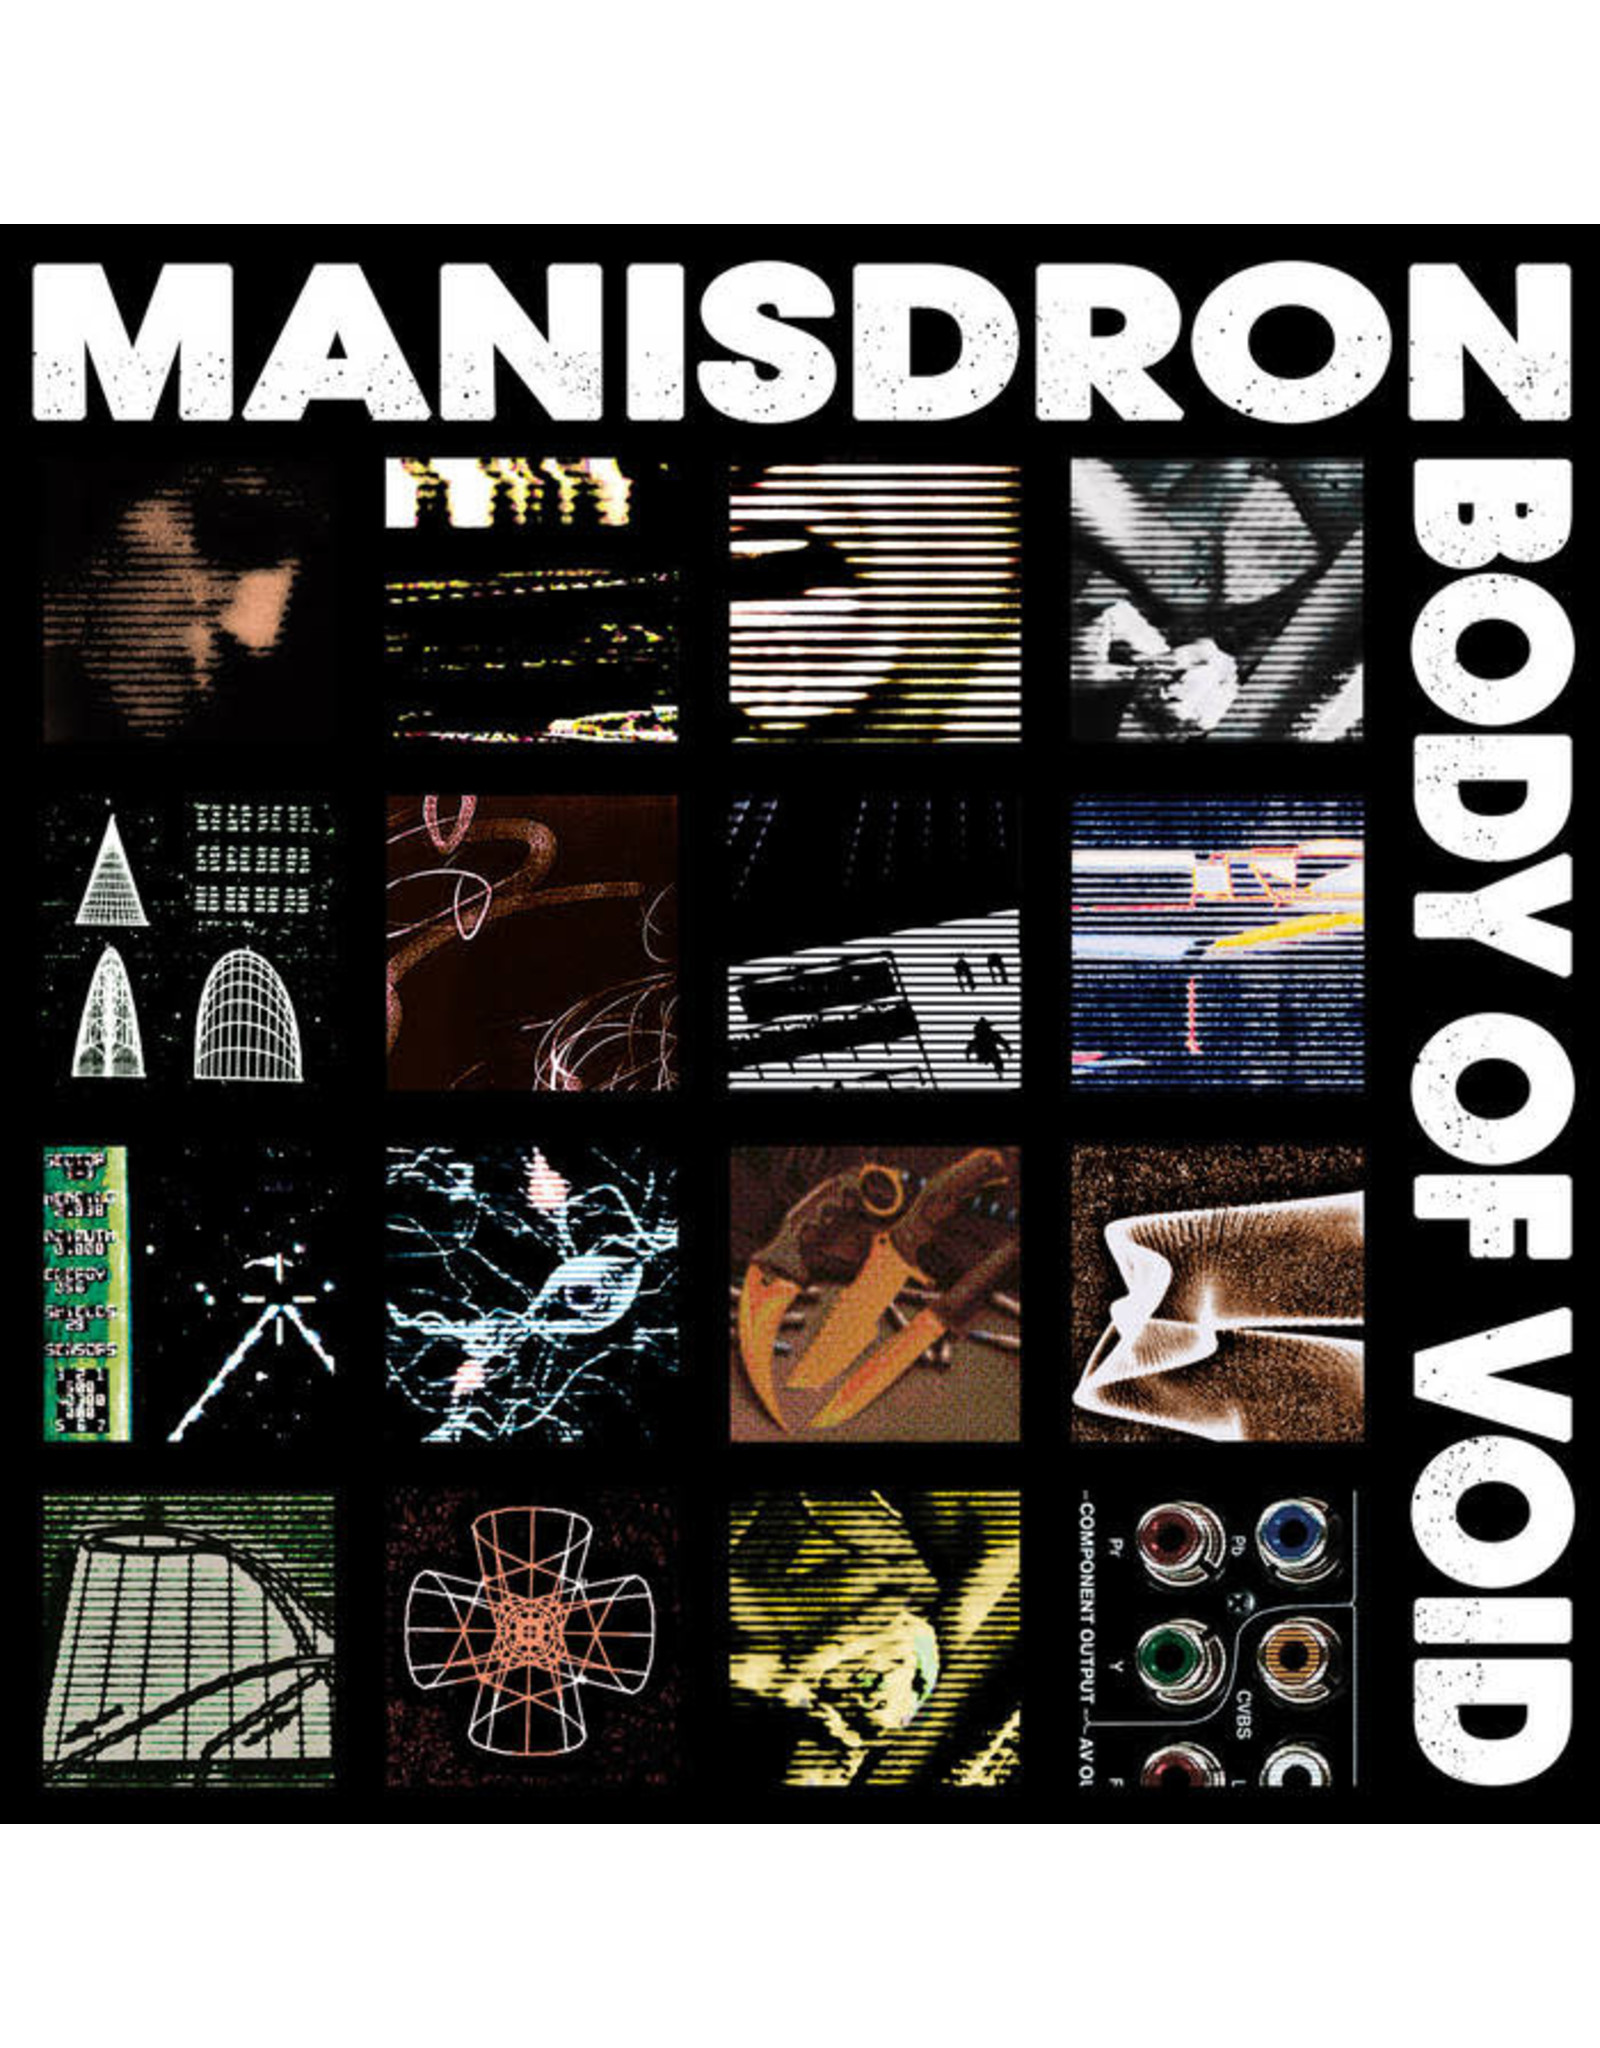 L.I.E.S. Manisdron: Body of Void LP